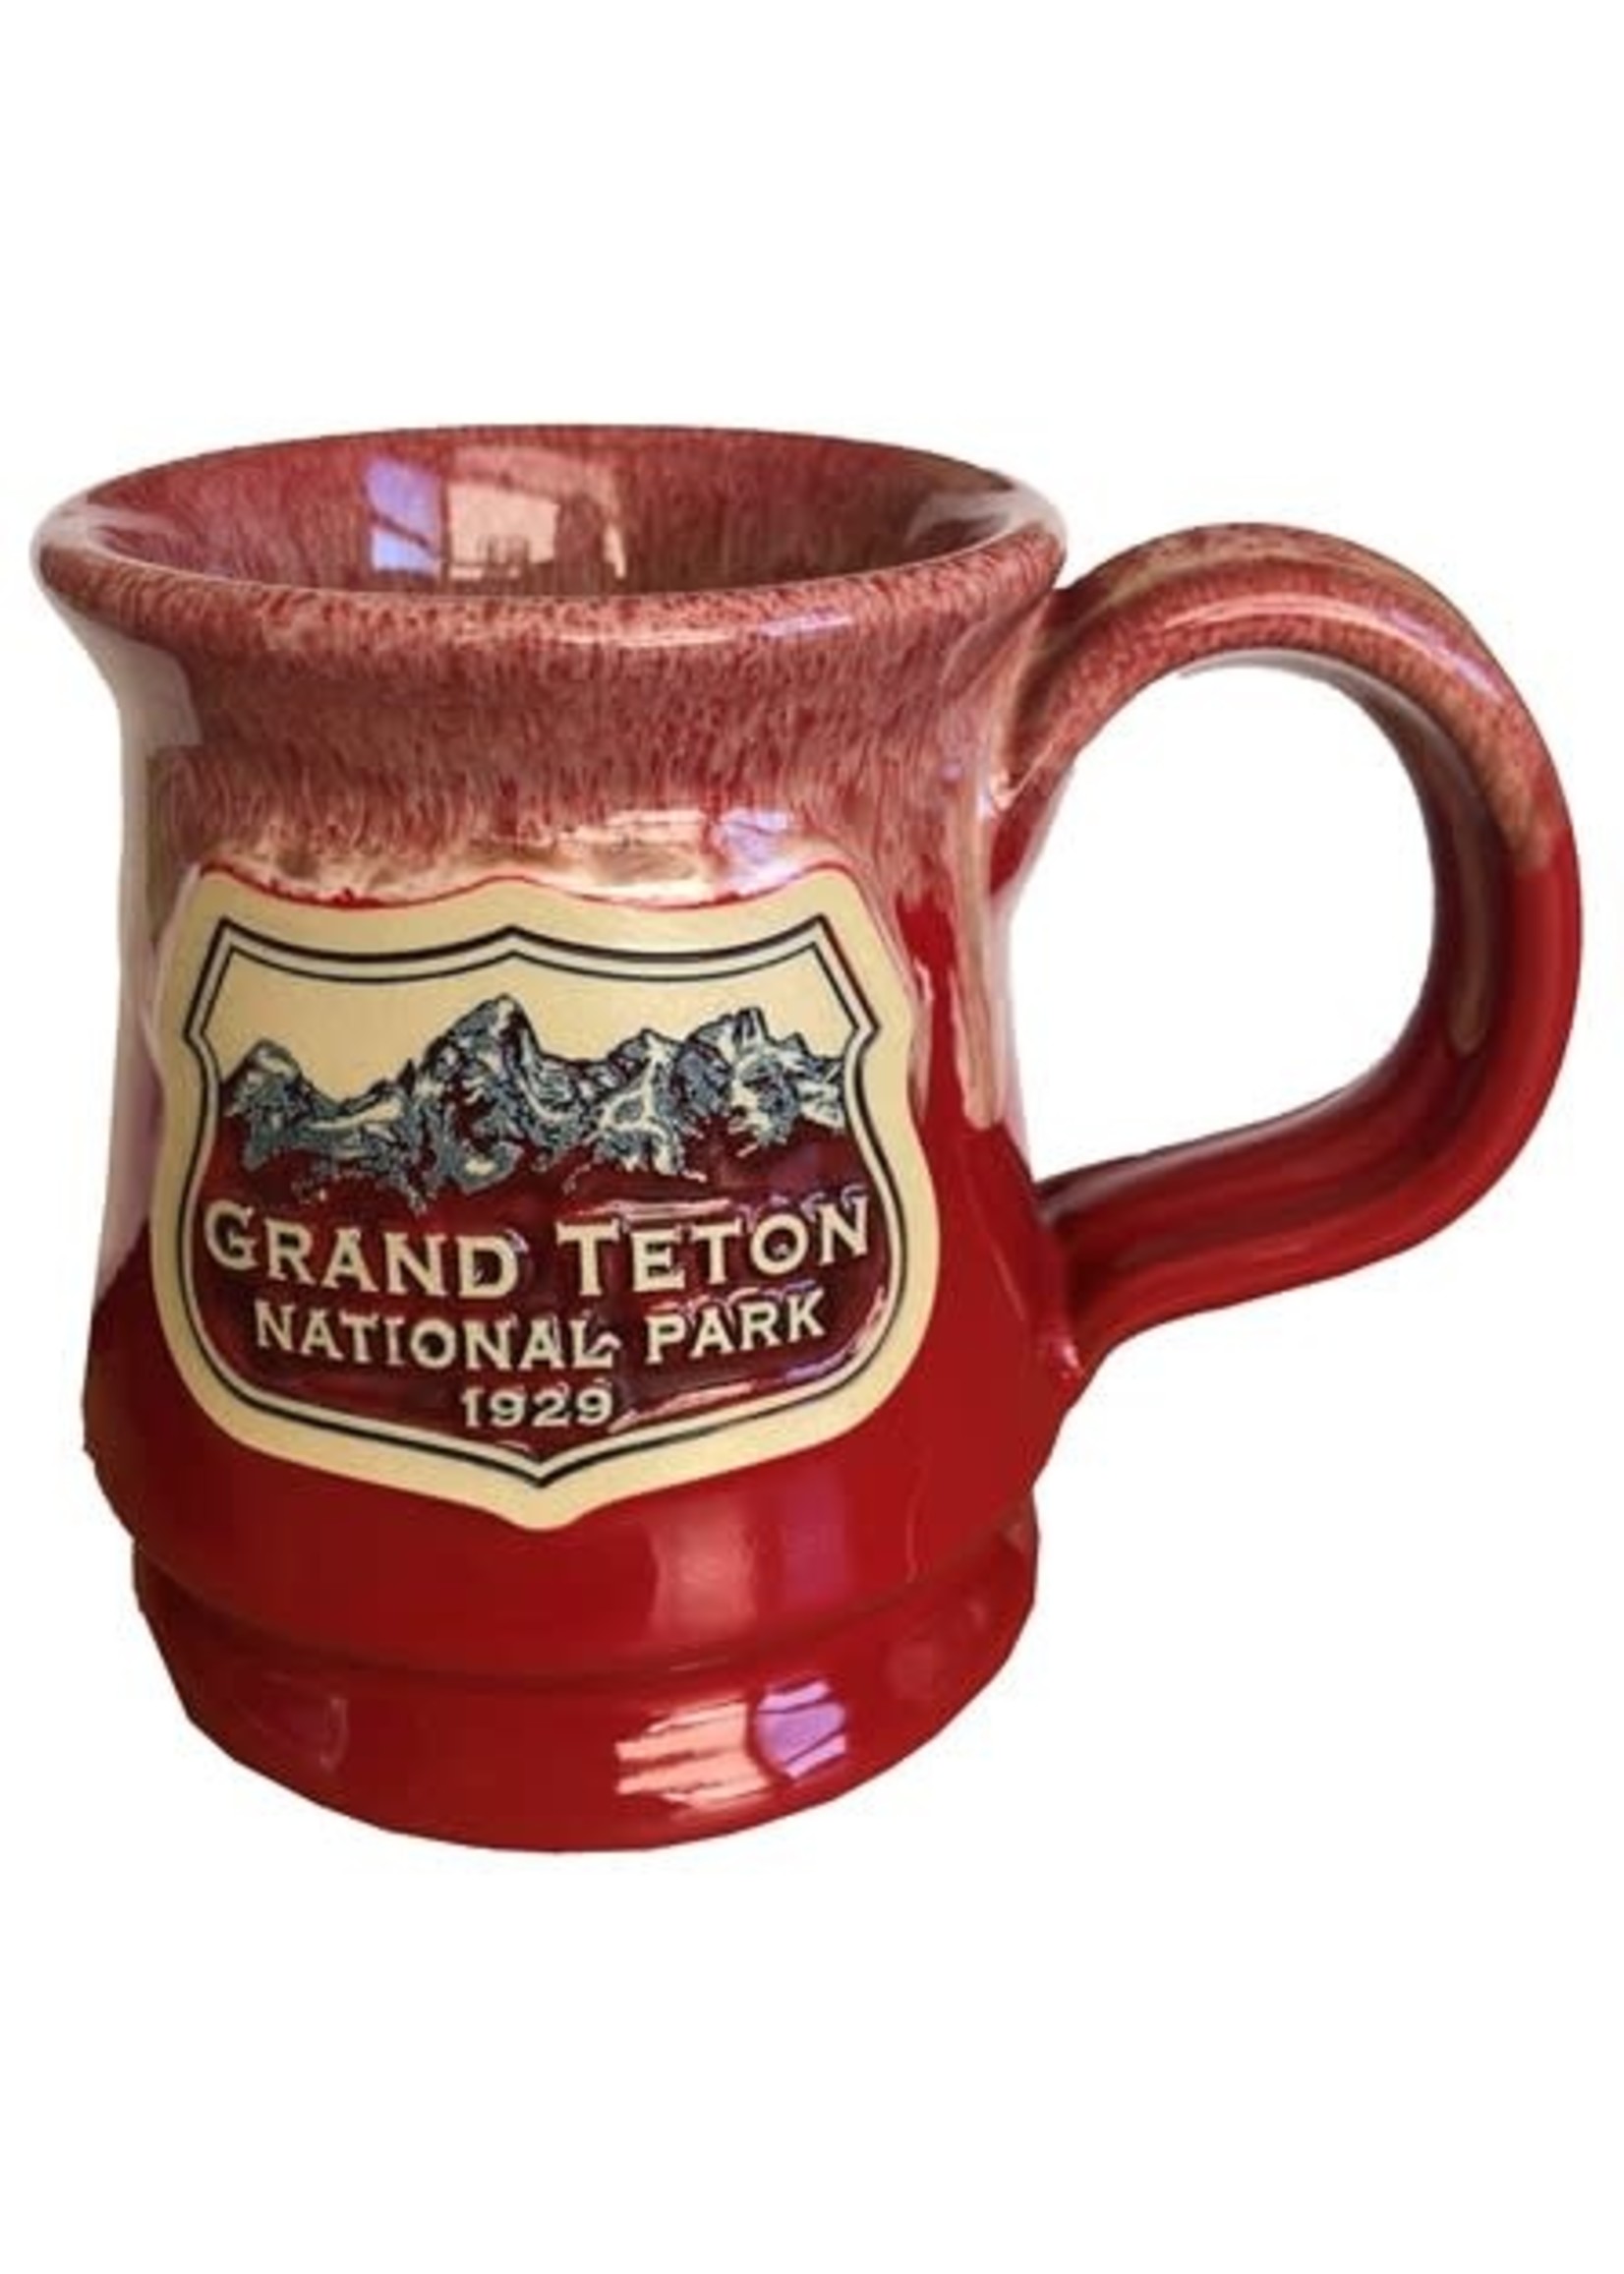 Grand Teton Deneen Pottery Mug - Red